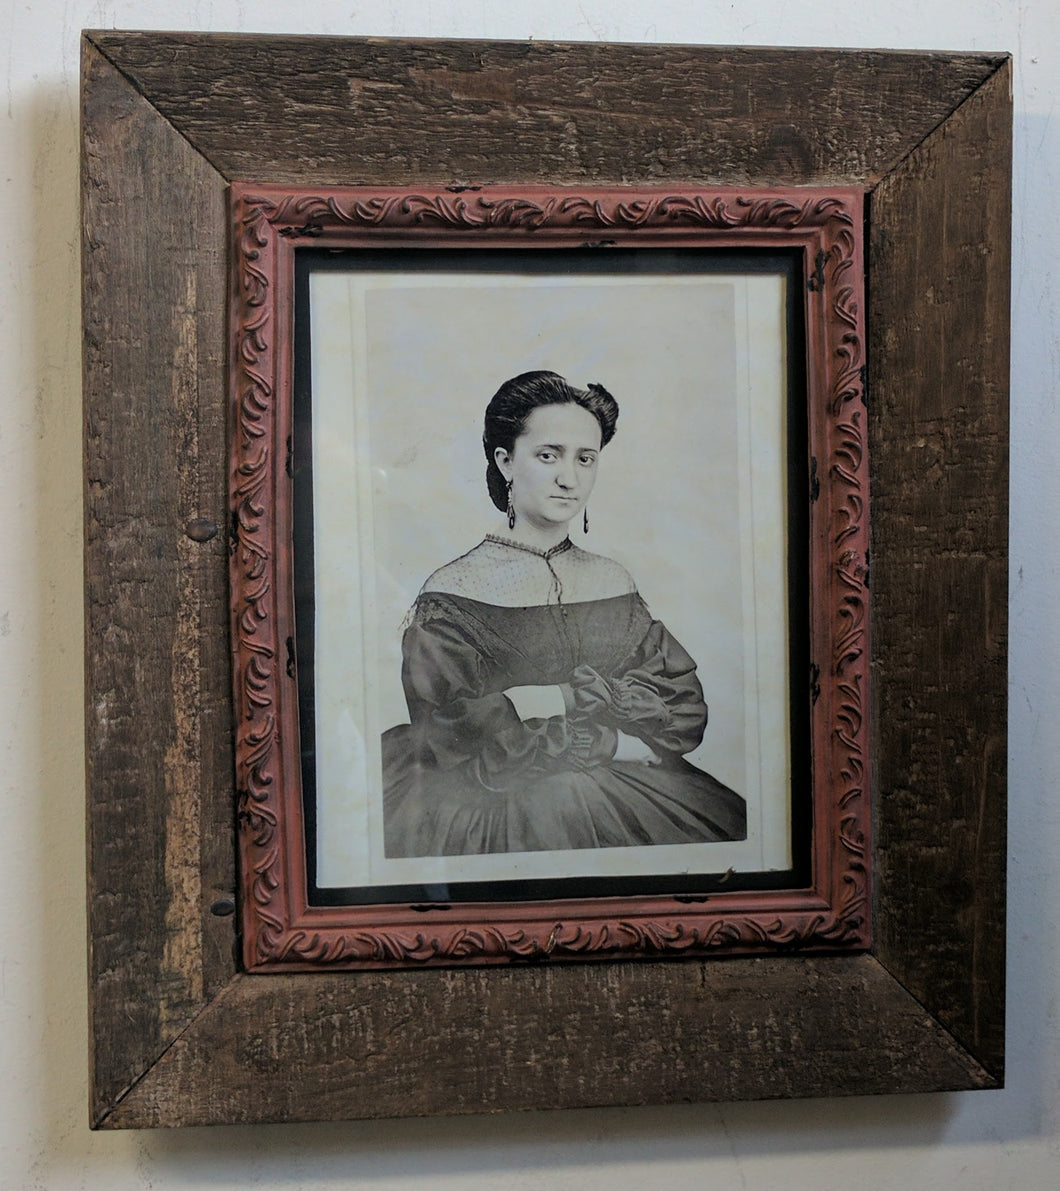 3072 Portrait of Woman in Ballgown Victorian Era Black and White